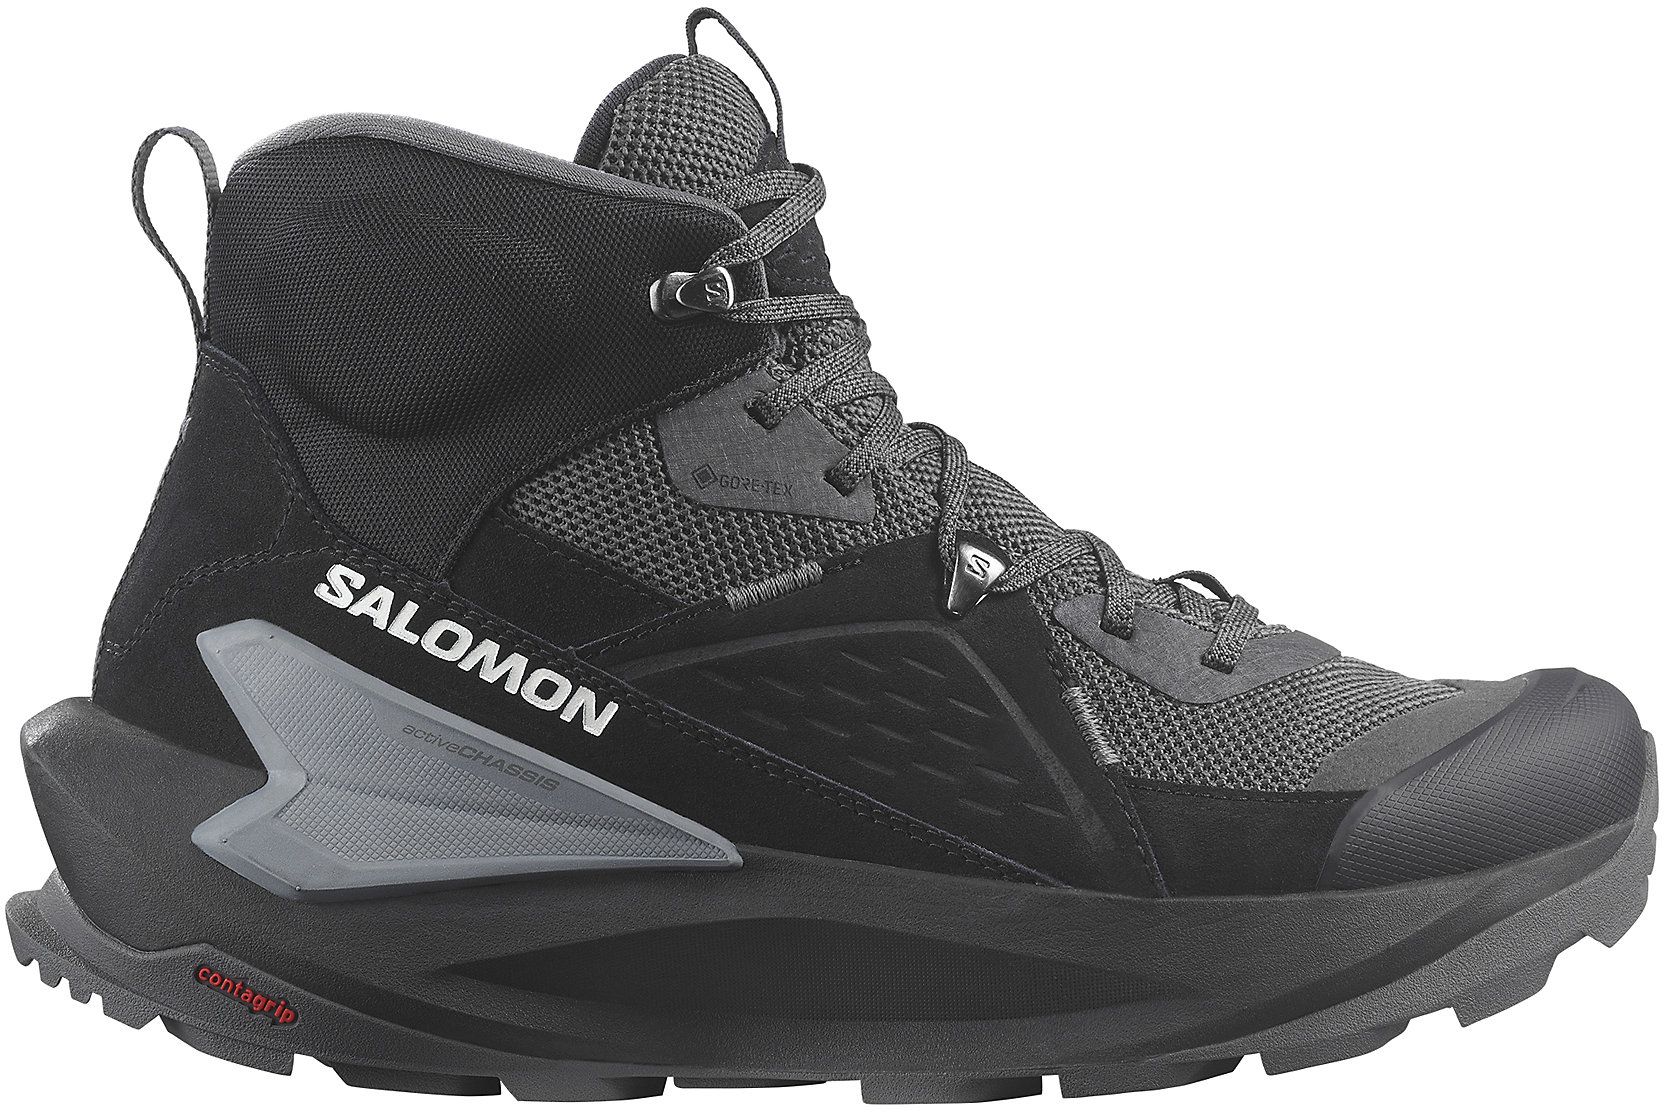 Photos - Trekking Shoes Salomon Men's Elixir Mid GTX Boot, Size 9.5, Black/Magnet/Quiet Shade 23SA 